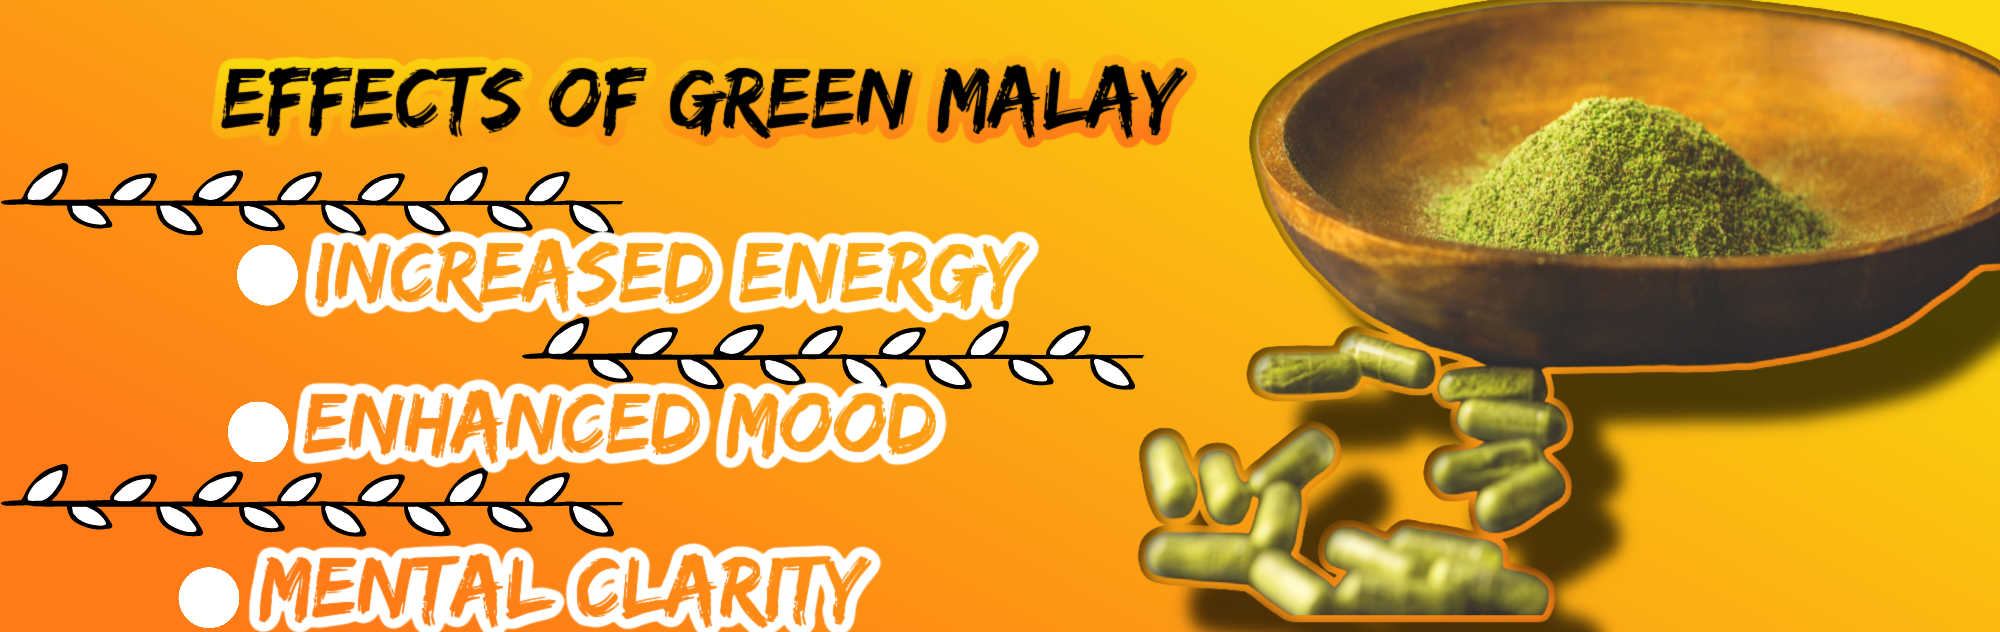 image of green malay kratom effects